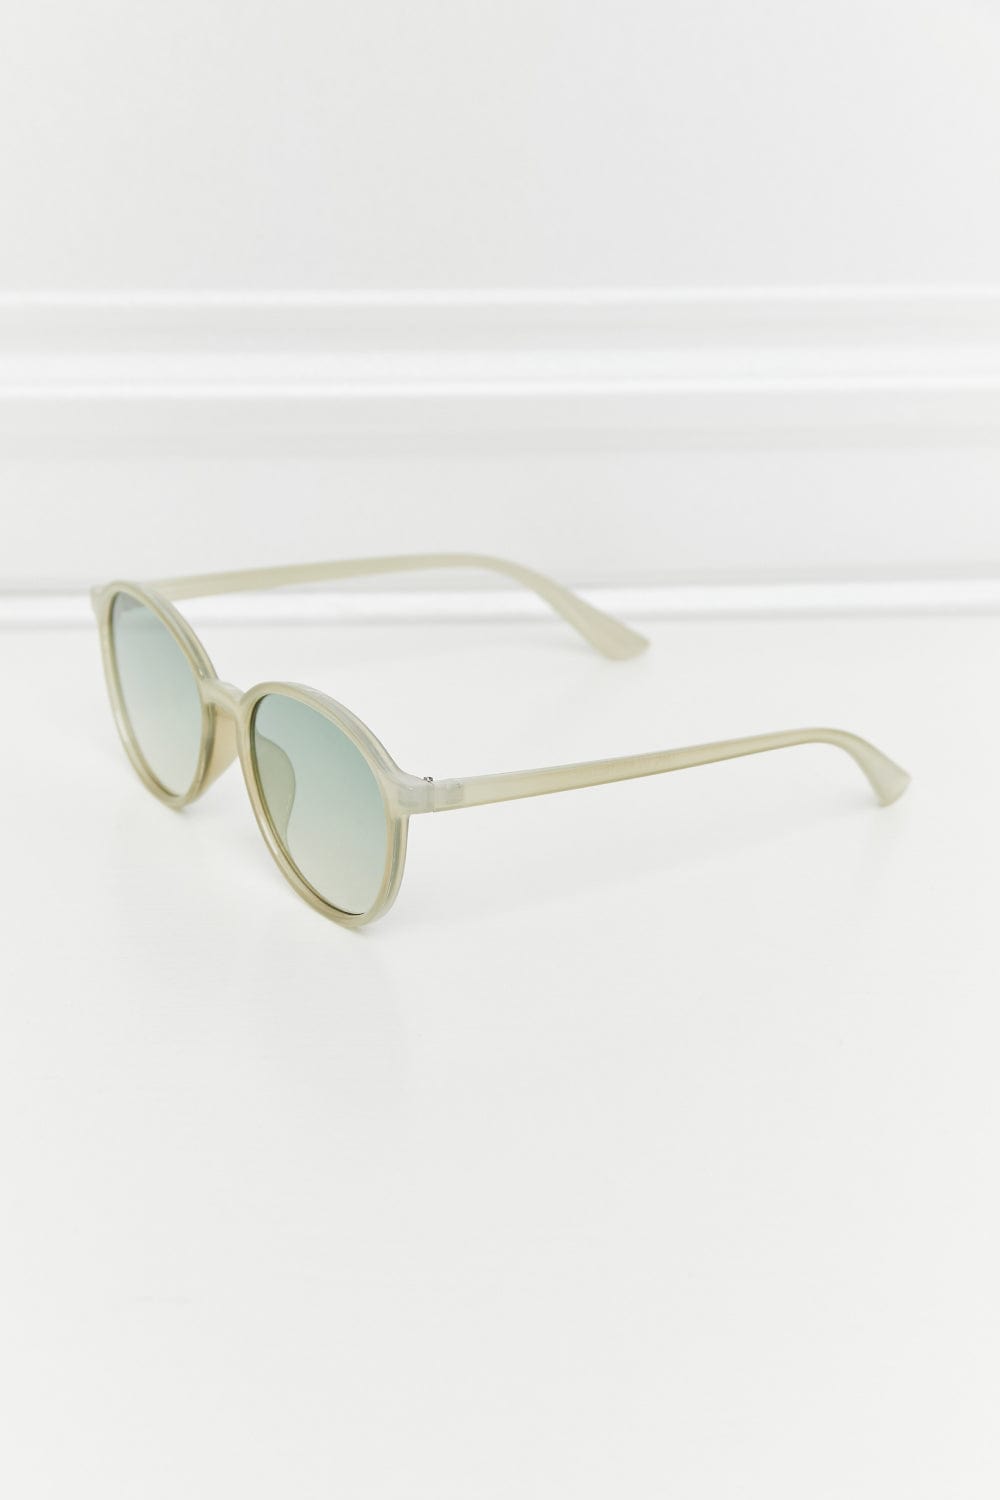 Trendsi Mist Green / One Size Full Rim Polycarbonate Frame Sunglasses